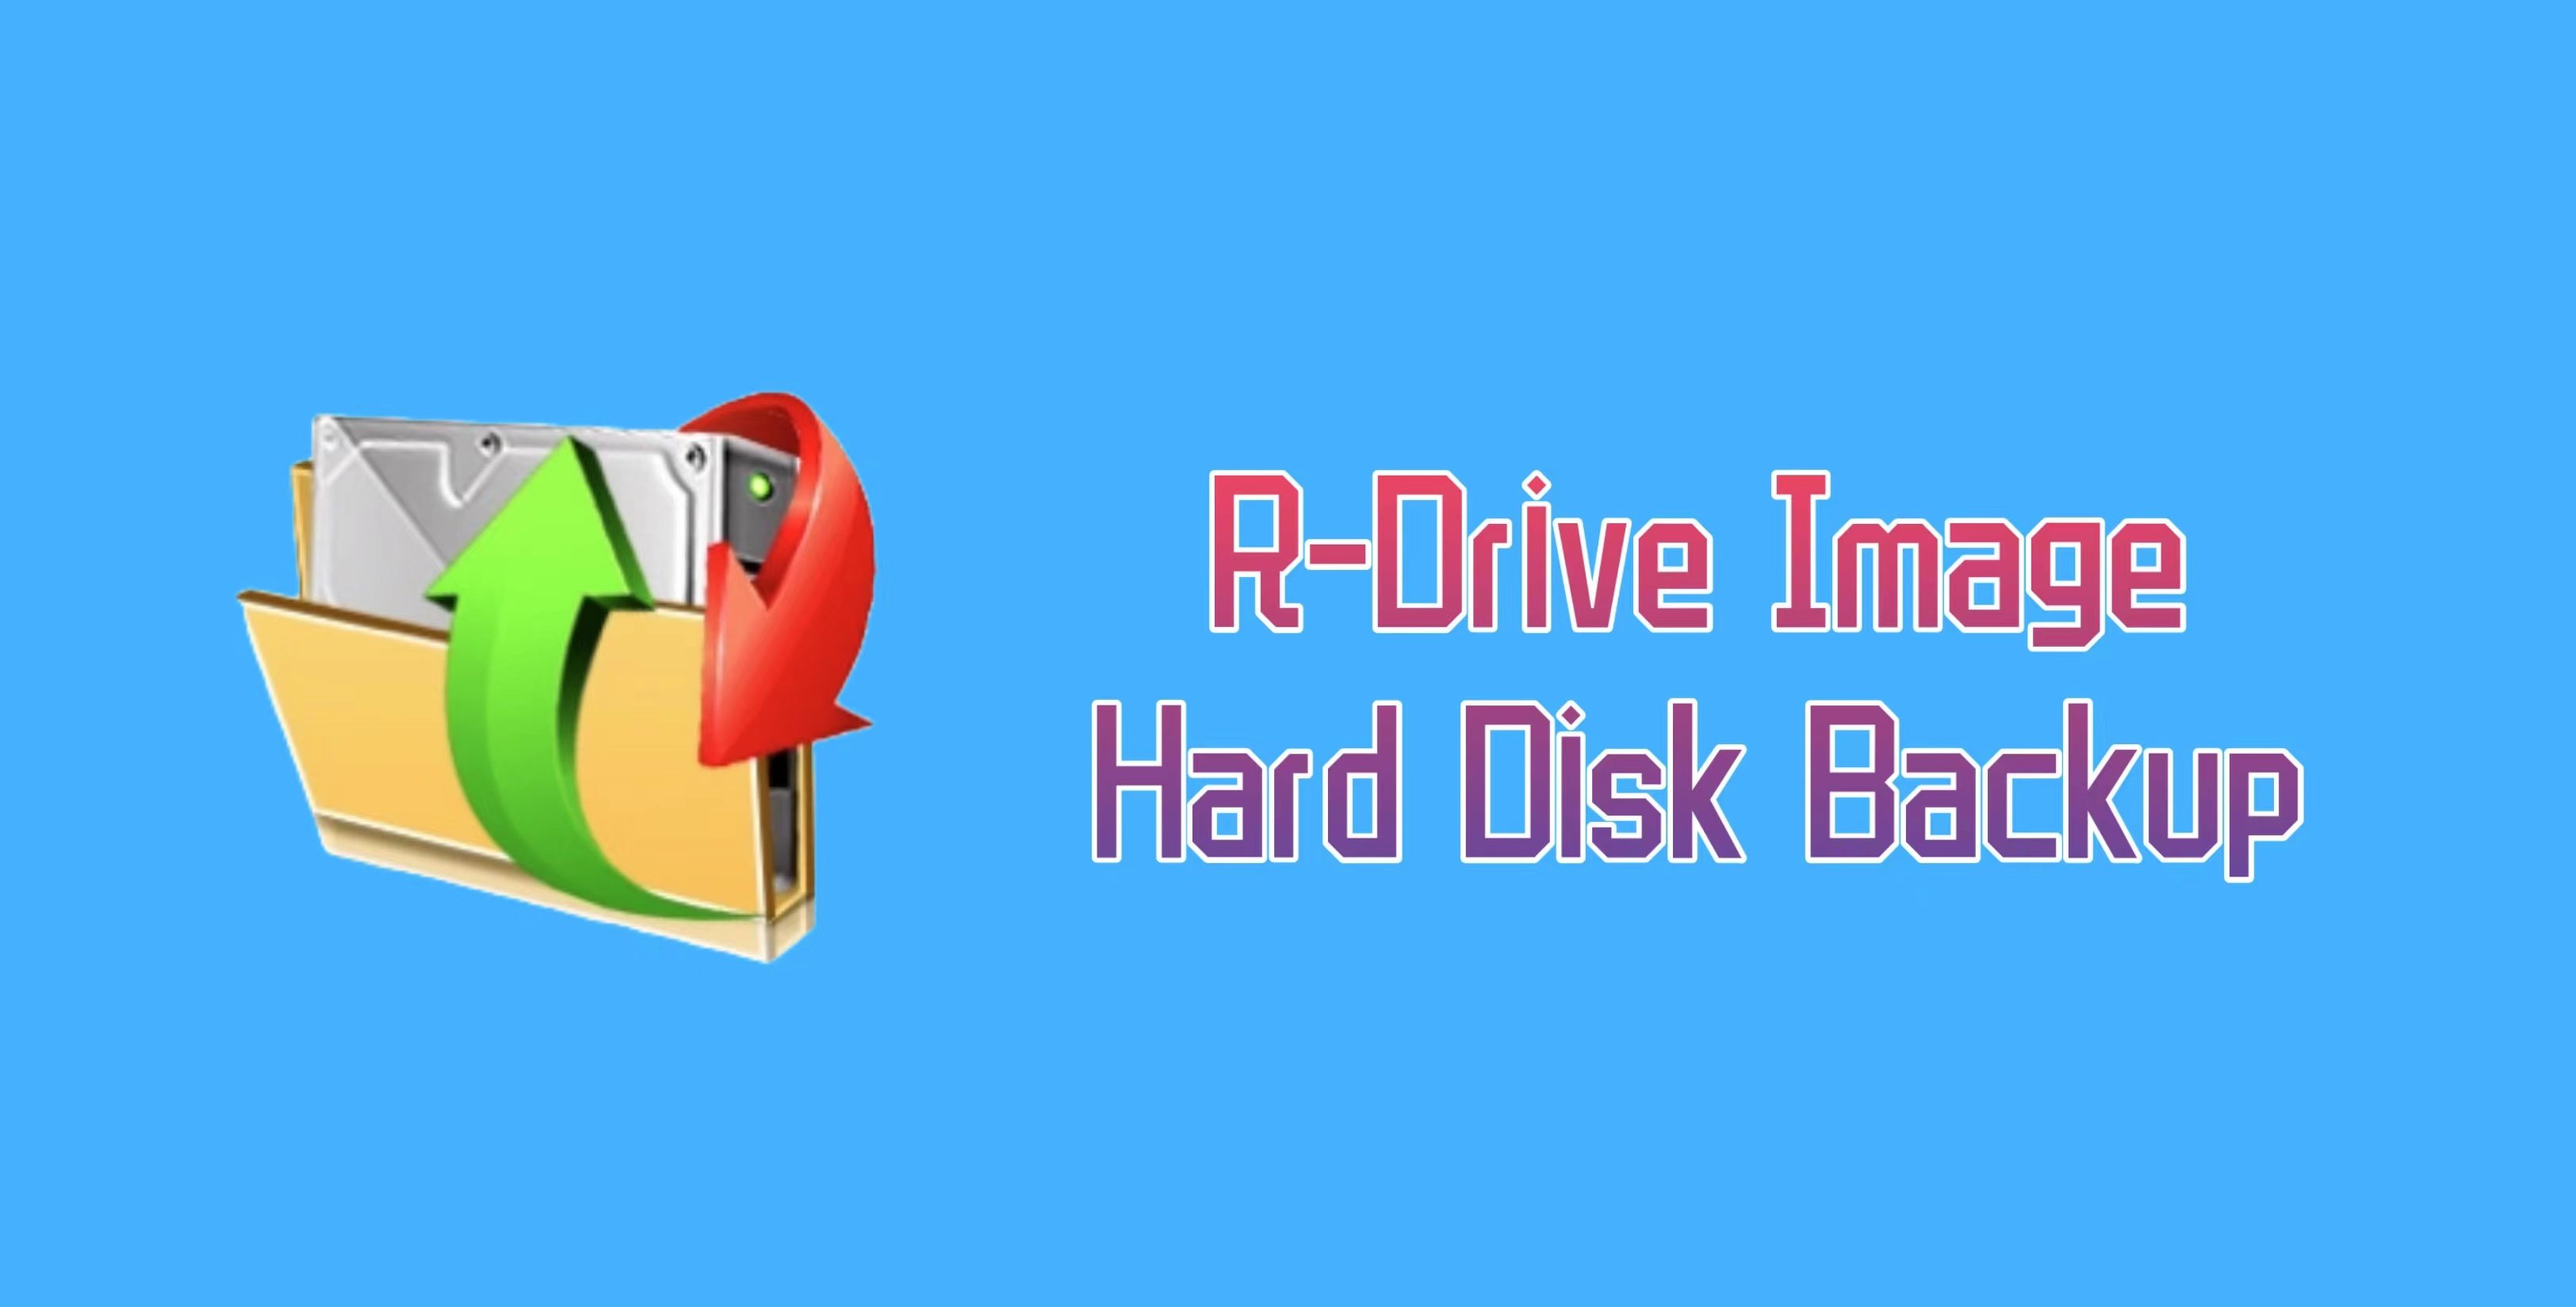 R-Drive Image Hard Disk Backup